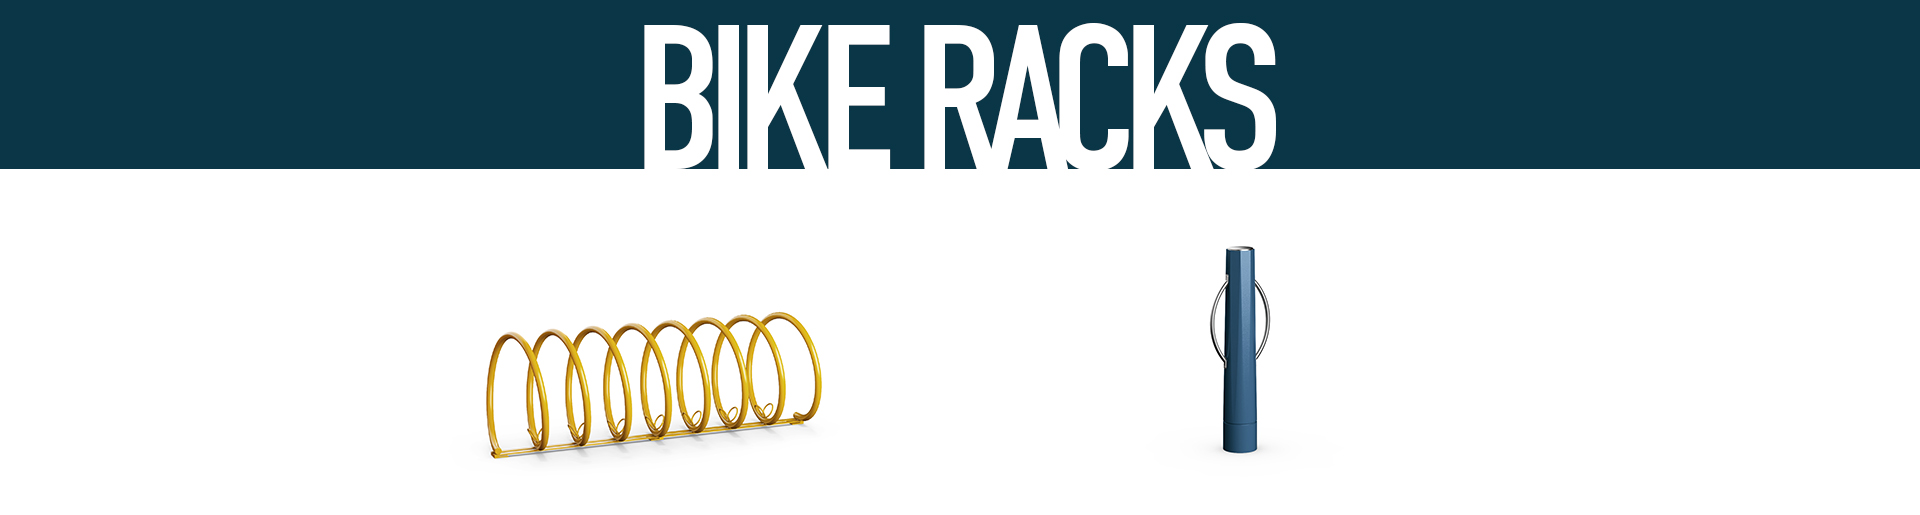 231219_Year in Review_Selects_Bike_Racks.jpg